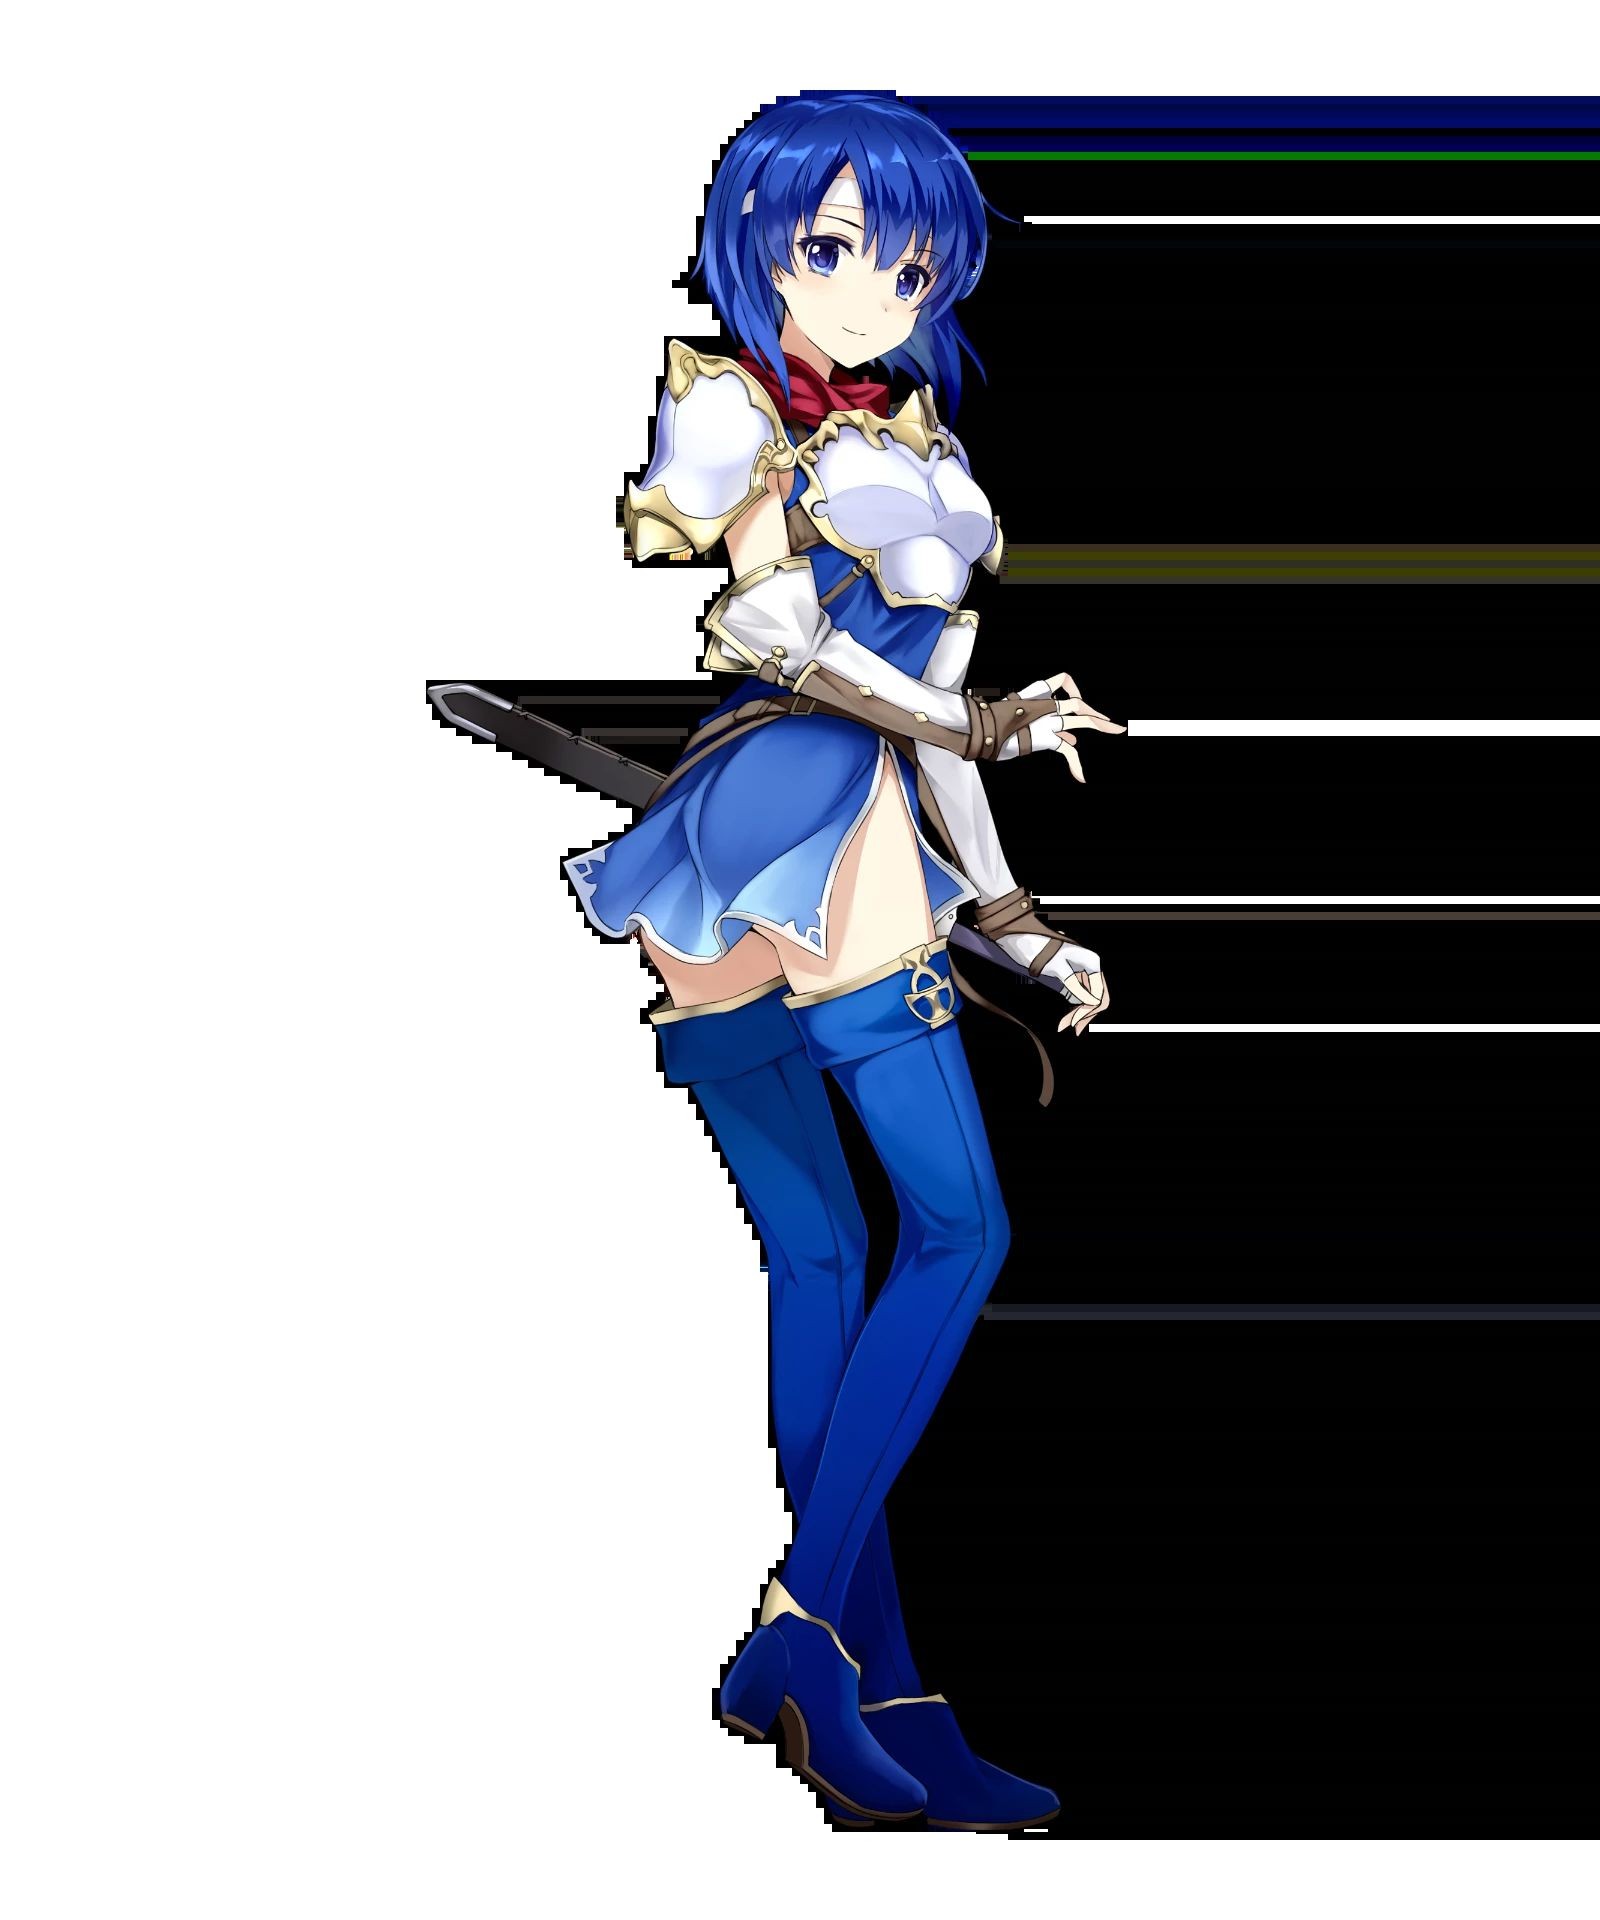 Party 【Image】Female Knight Wears Skirt On The Battlefield Plumper